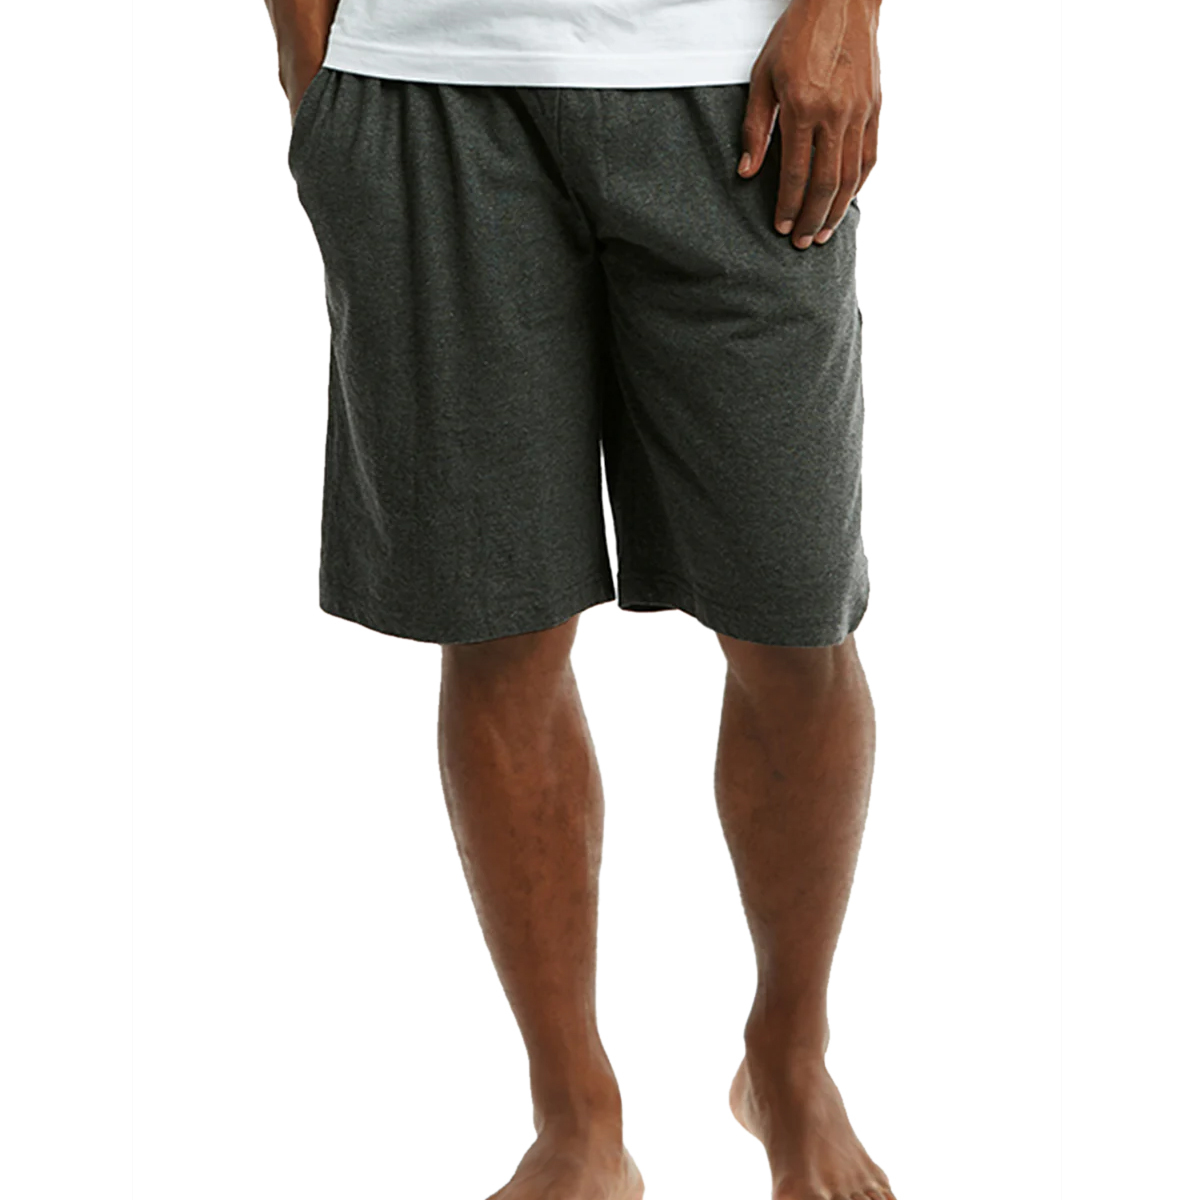 Men's Plaid Fleece Pajama Pants - 3X-5X, Red/Grey